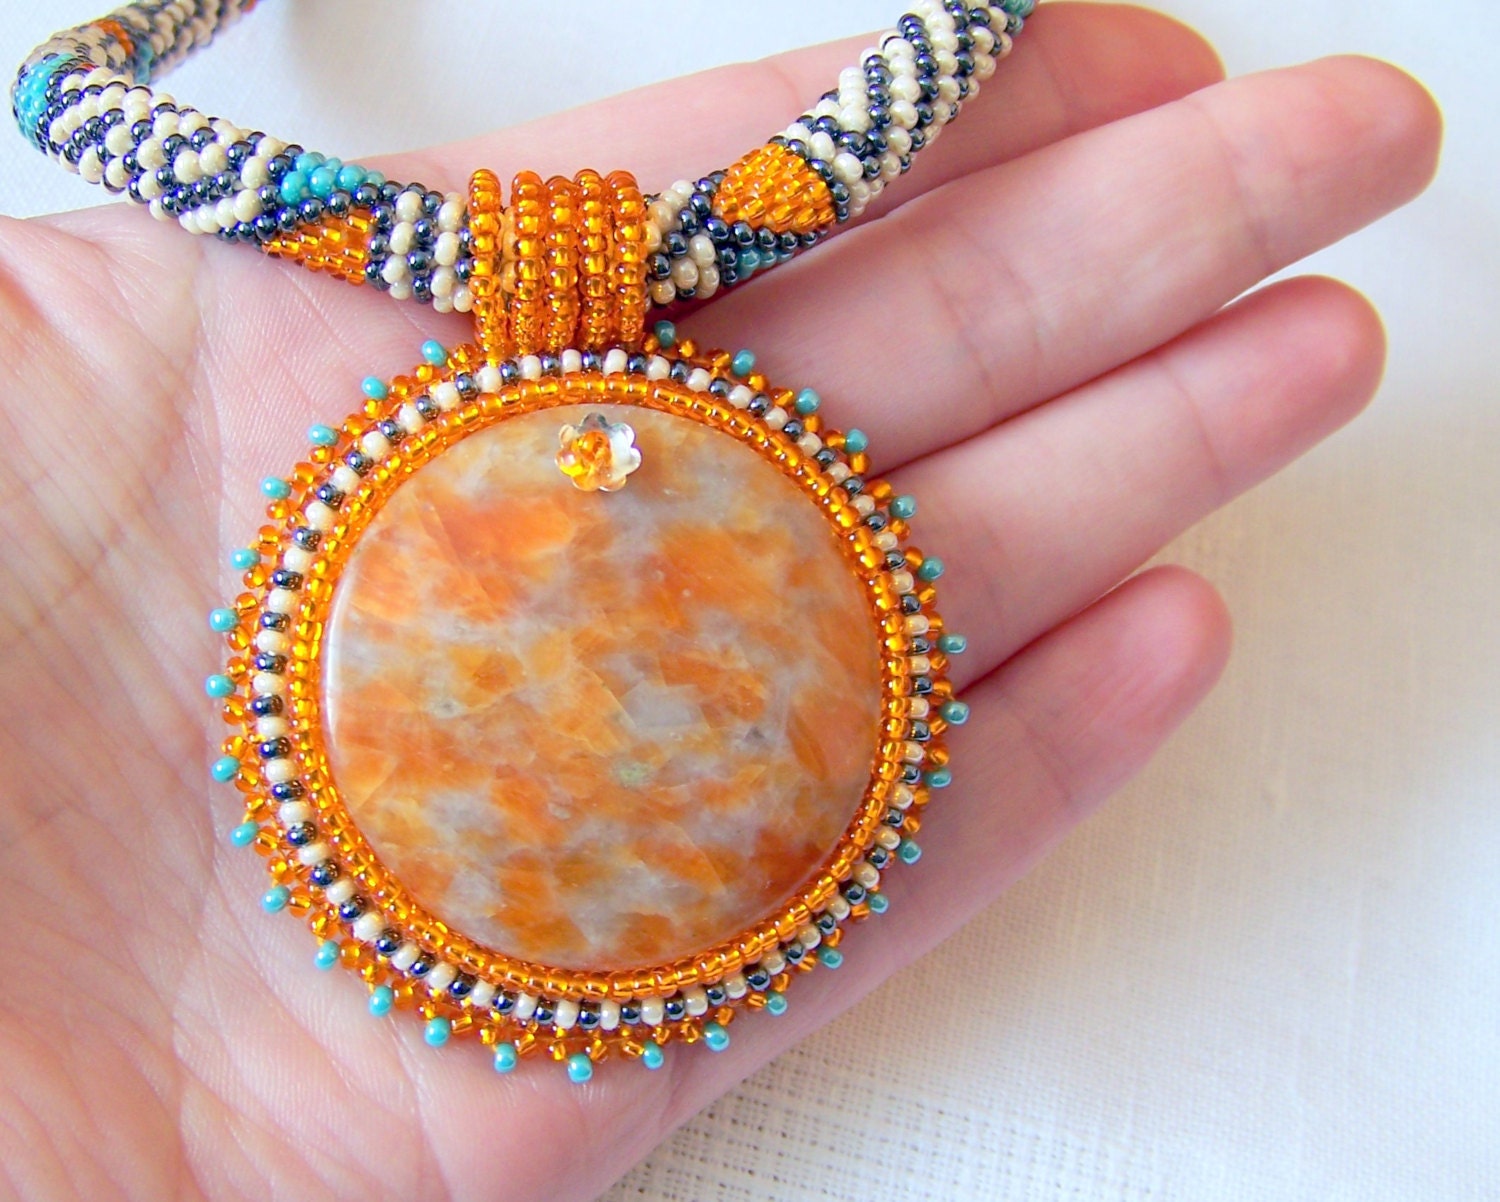 Beadwork Bead Embroidery Pendant Necklace with Orange Calcite - ORANGE DREAM - grey - beige - lutita